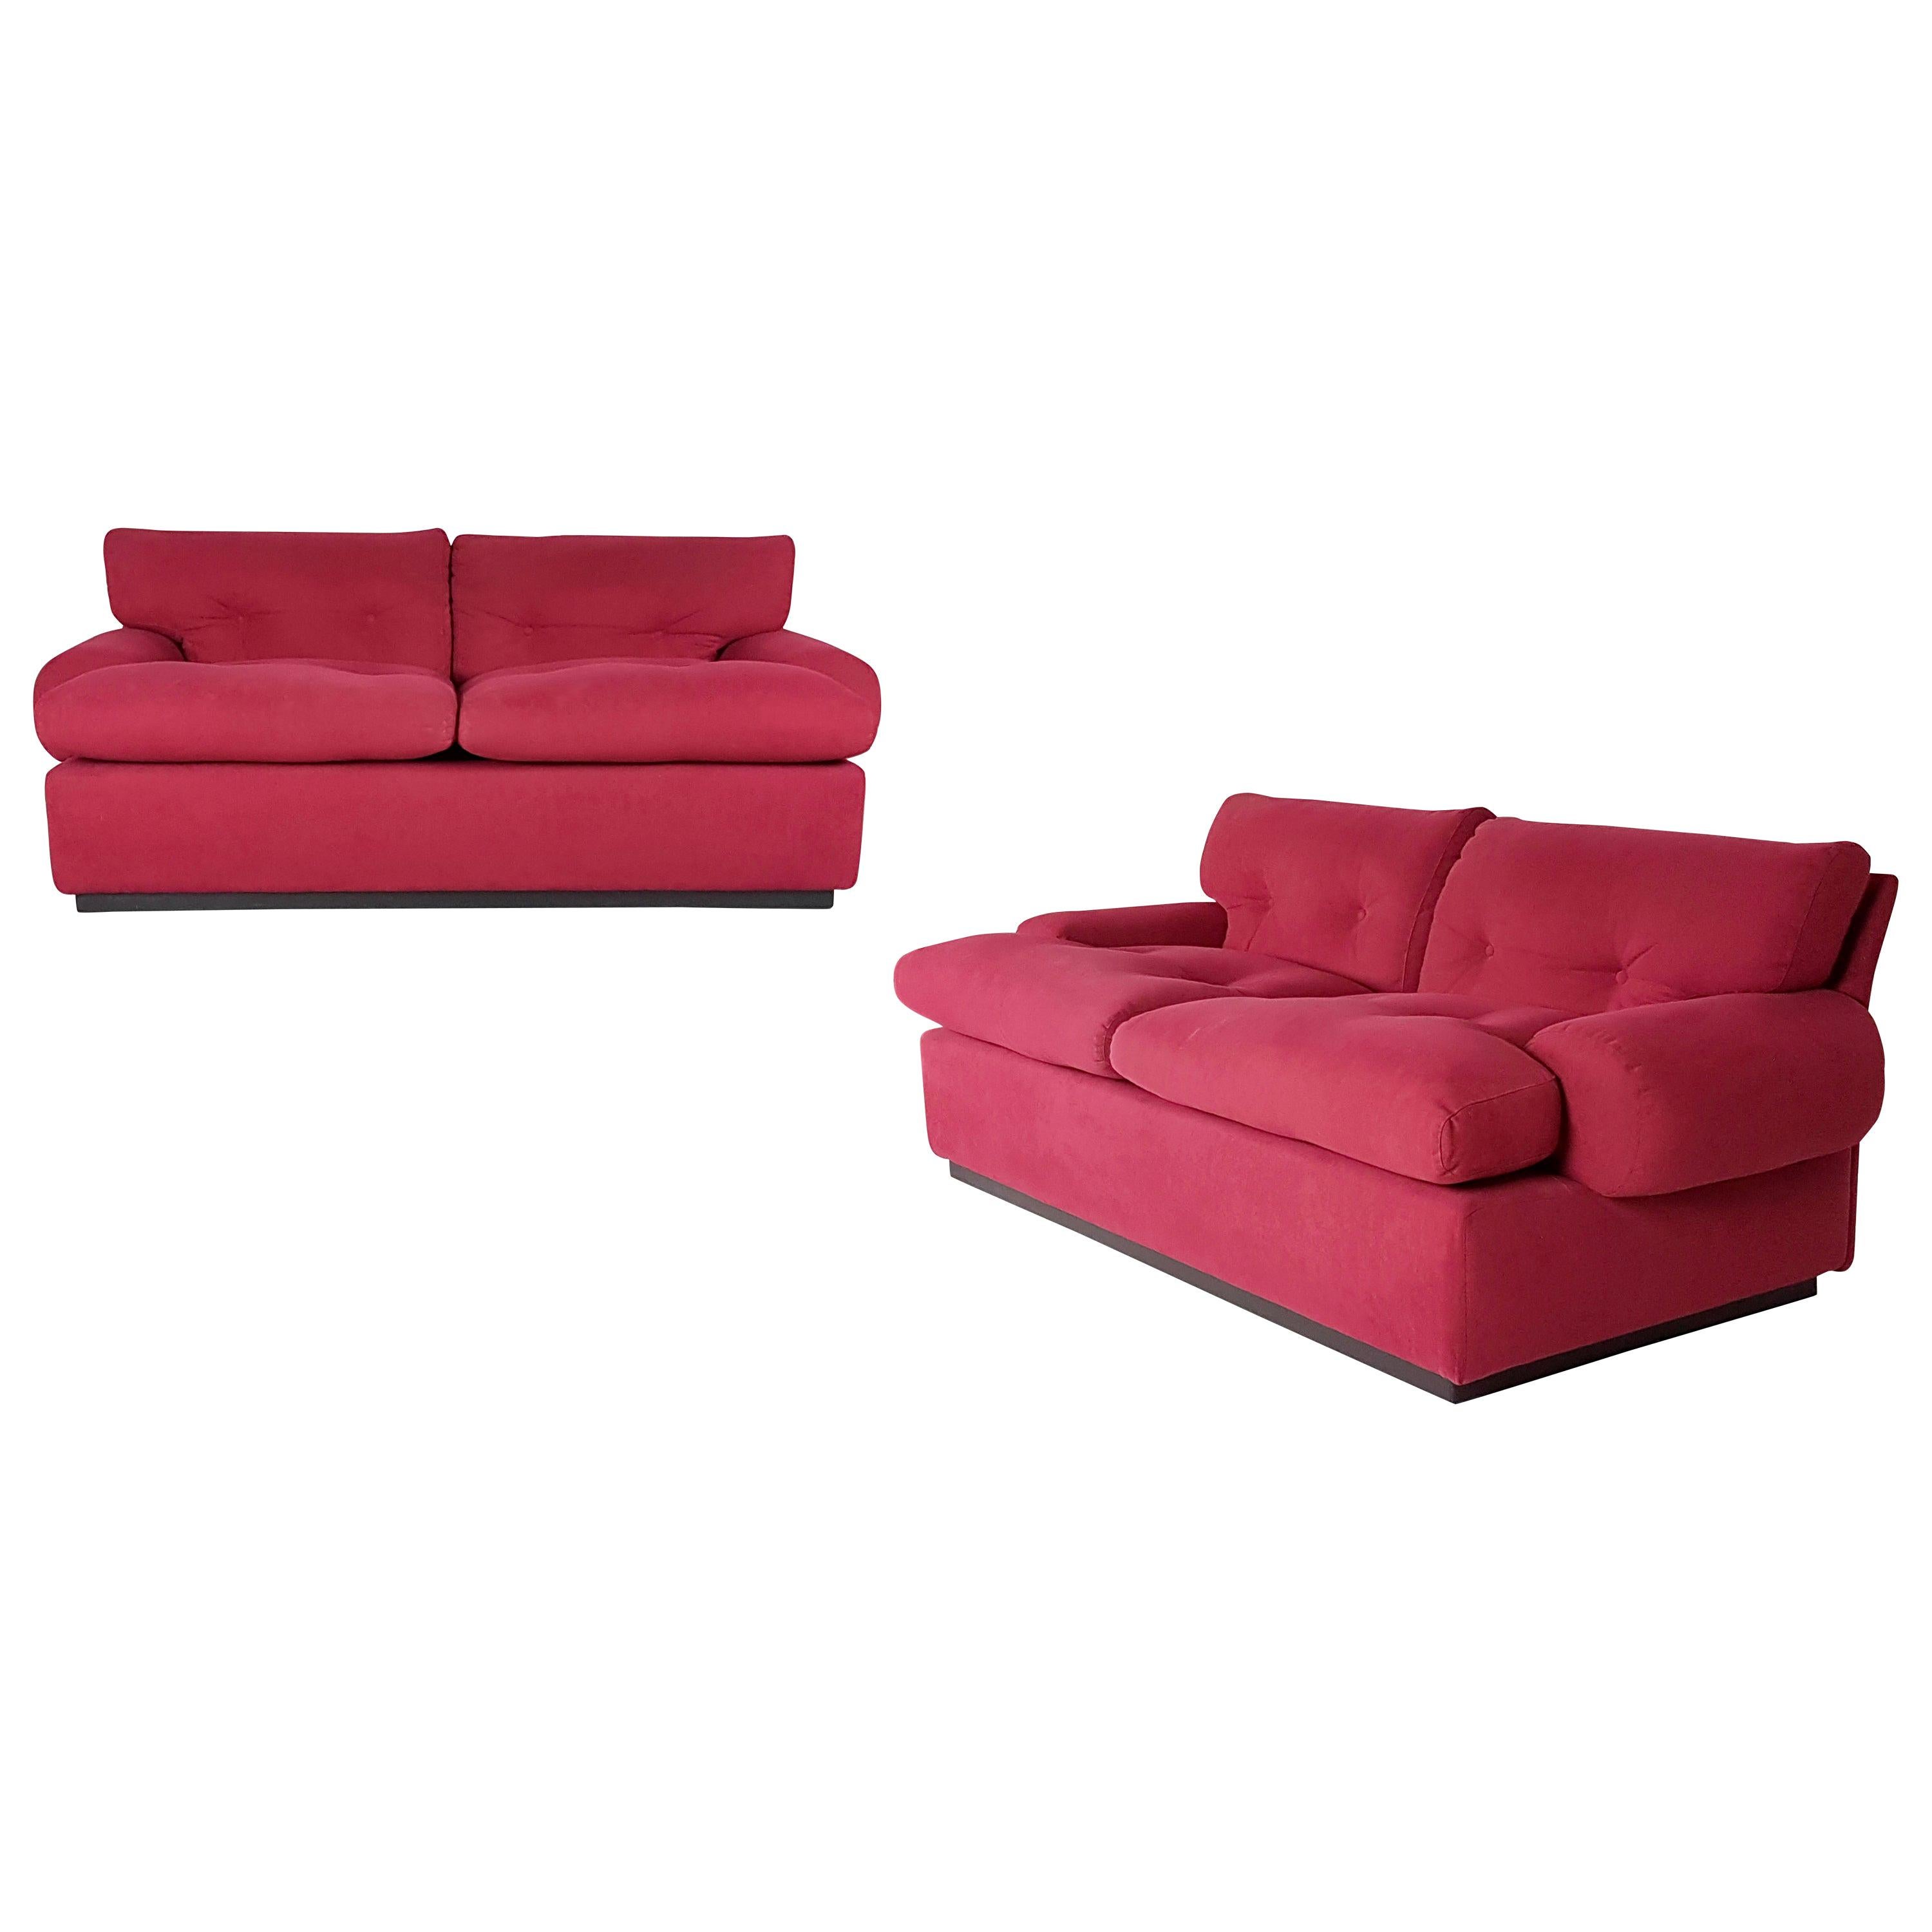 Pair of Alcantara Crimson & Wood 2-Seat 1960s Sofa by Cassina For Sale